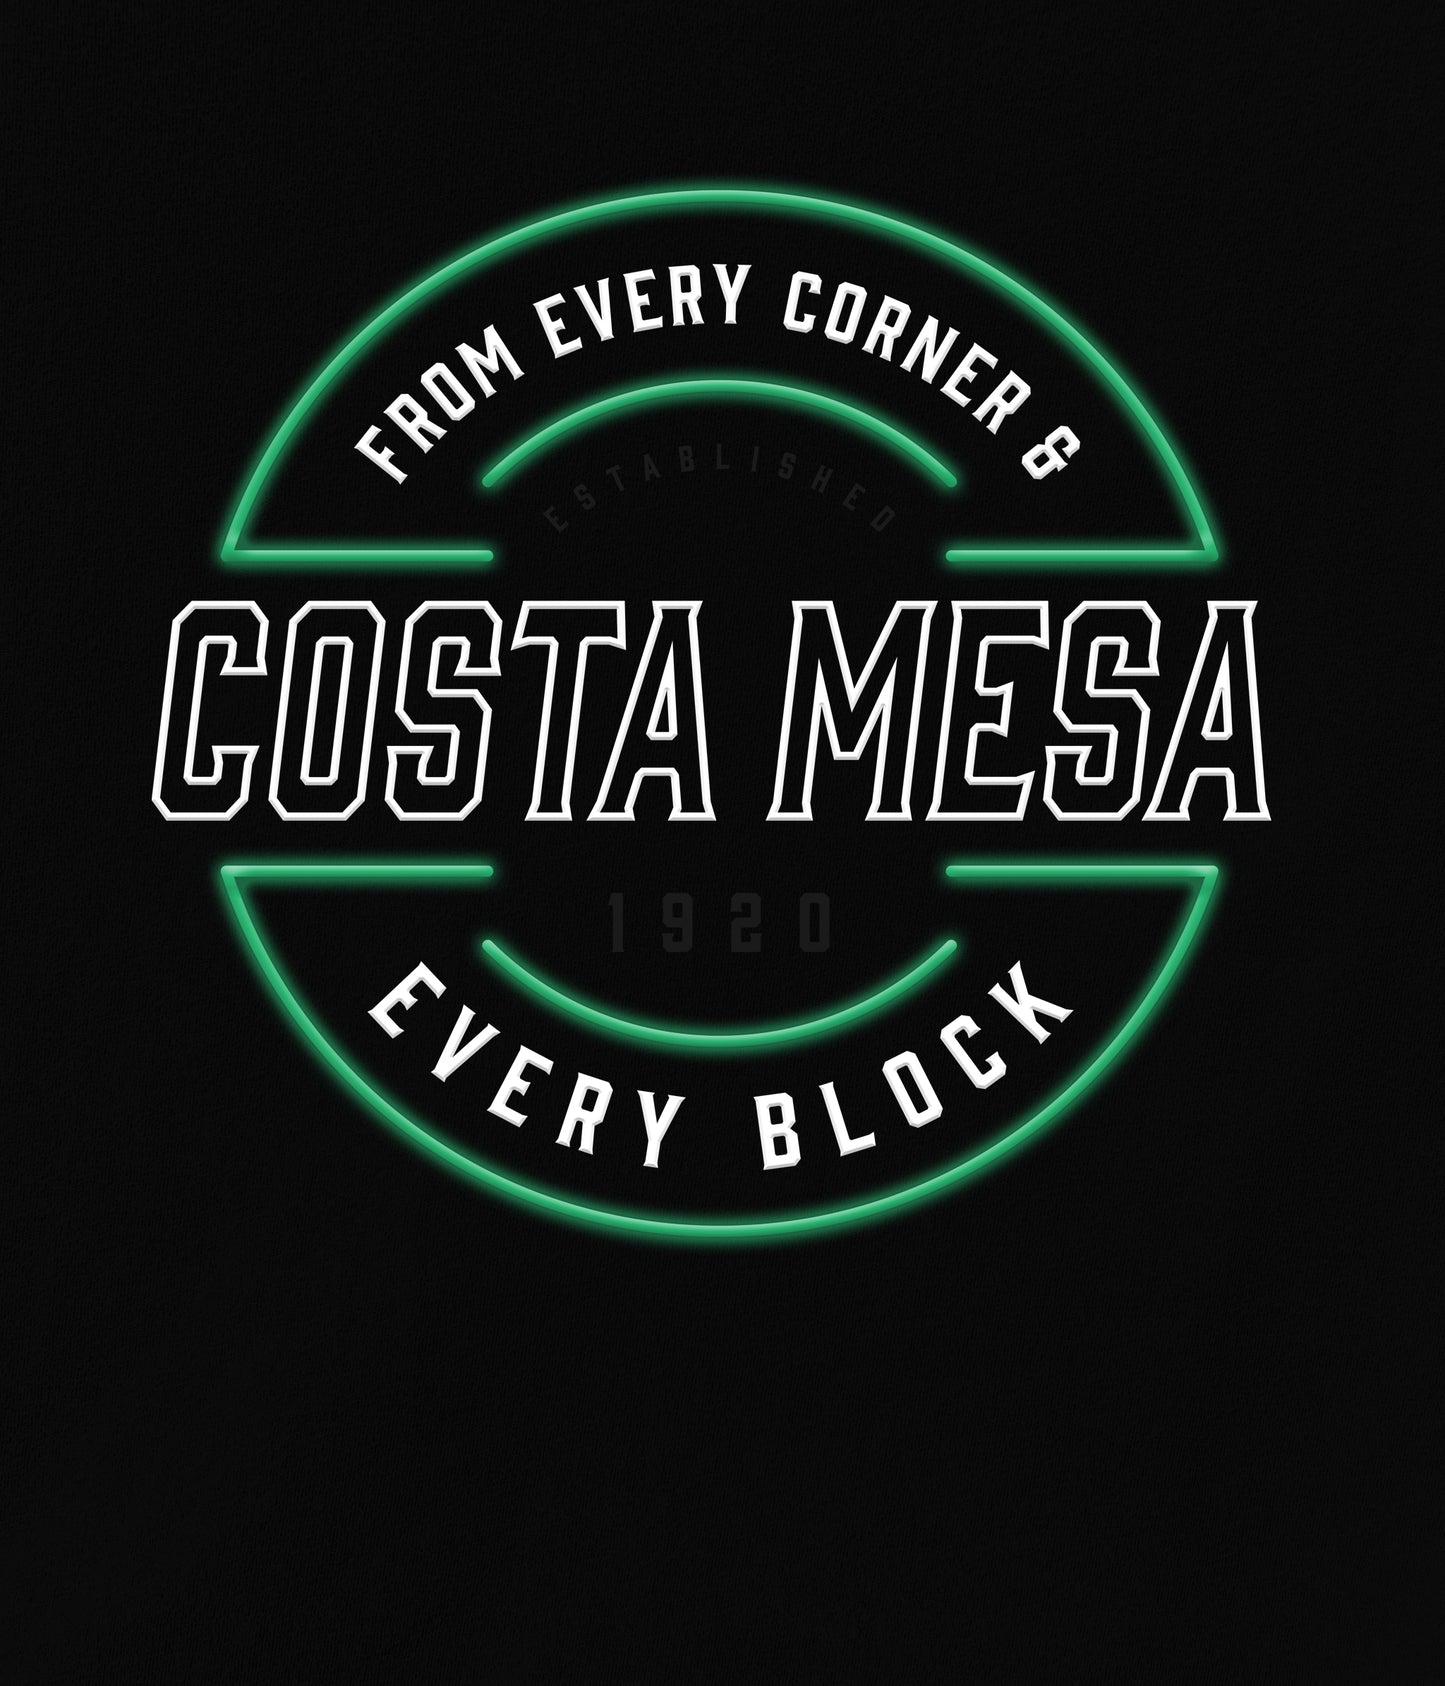 Costa Mesa Lit Up Hoody